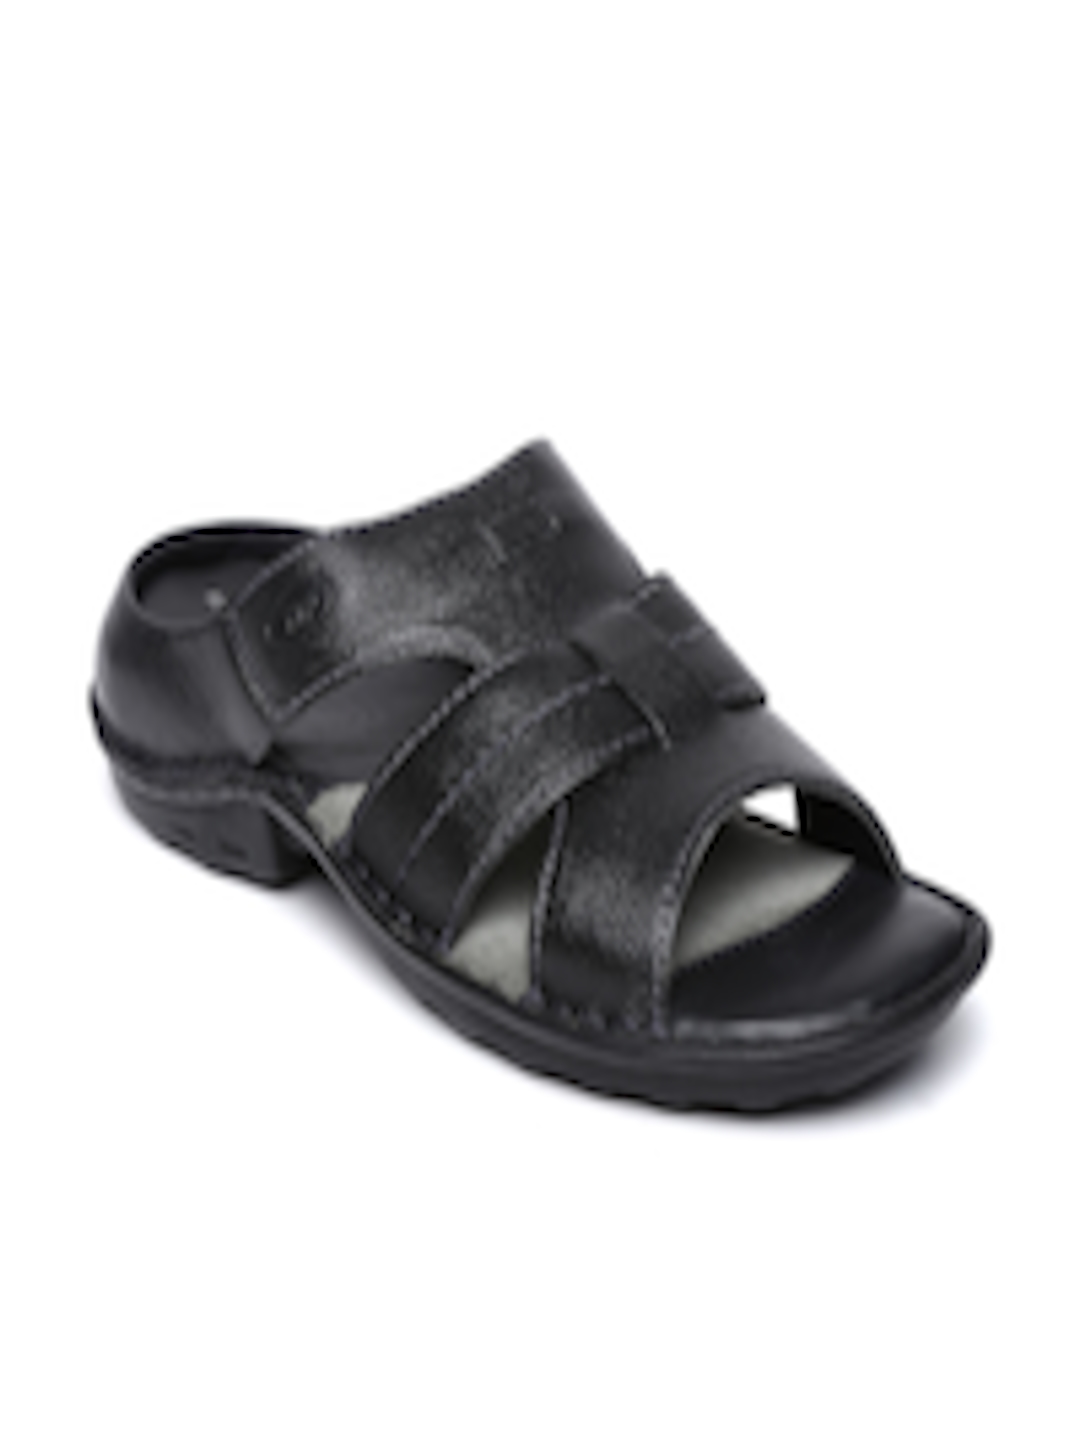 Buy Hush Puppies Men Black Leather Sandals - Sandals for Men 532391 ...